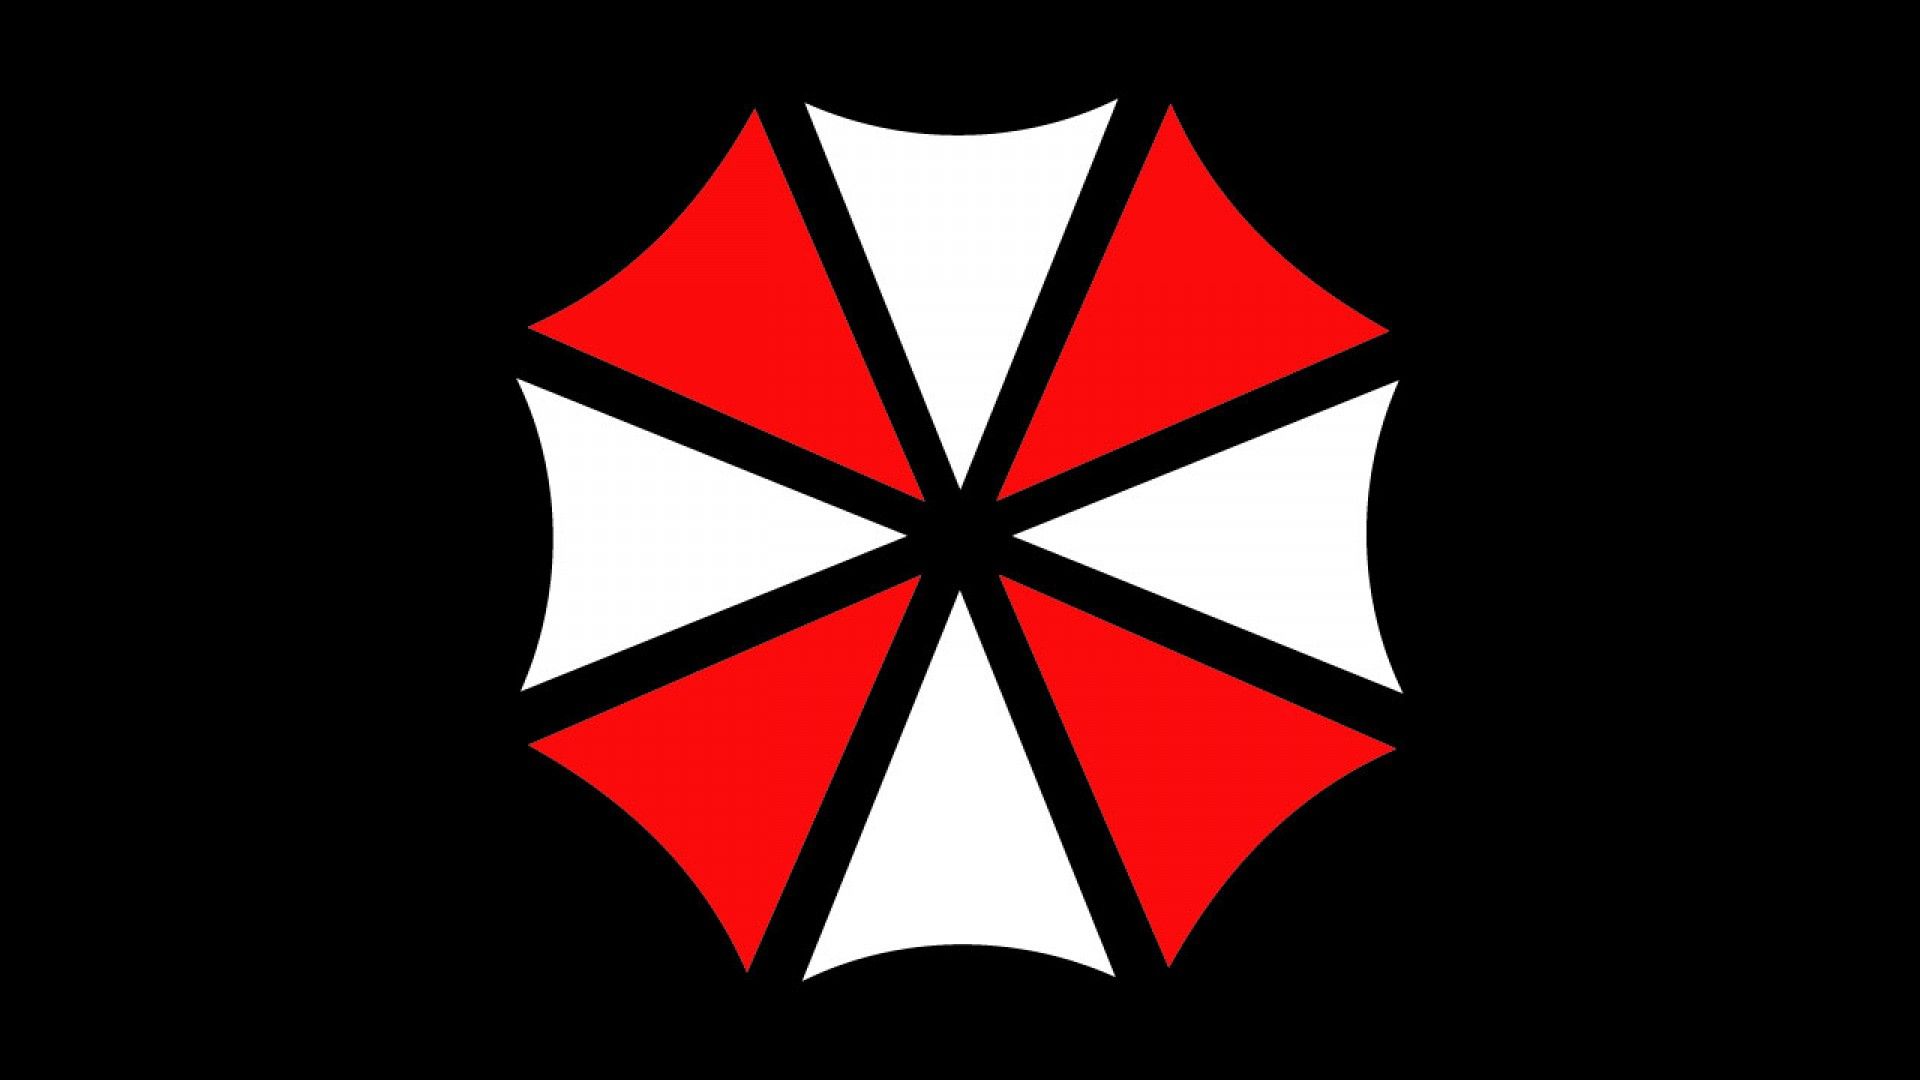 umbrella corporation logo